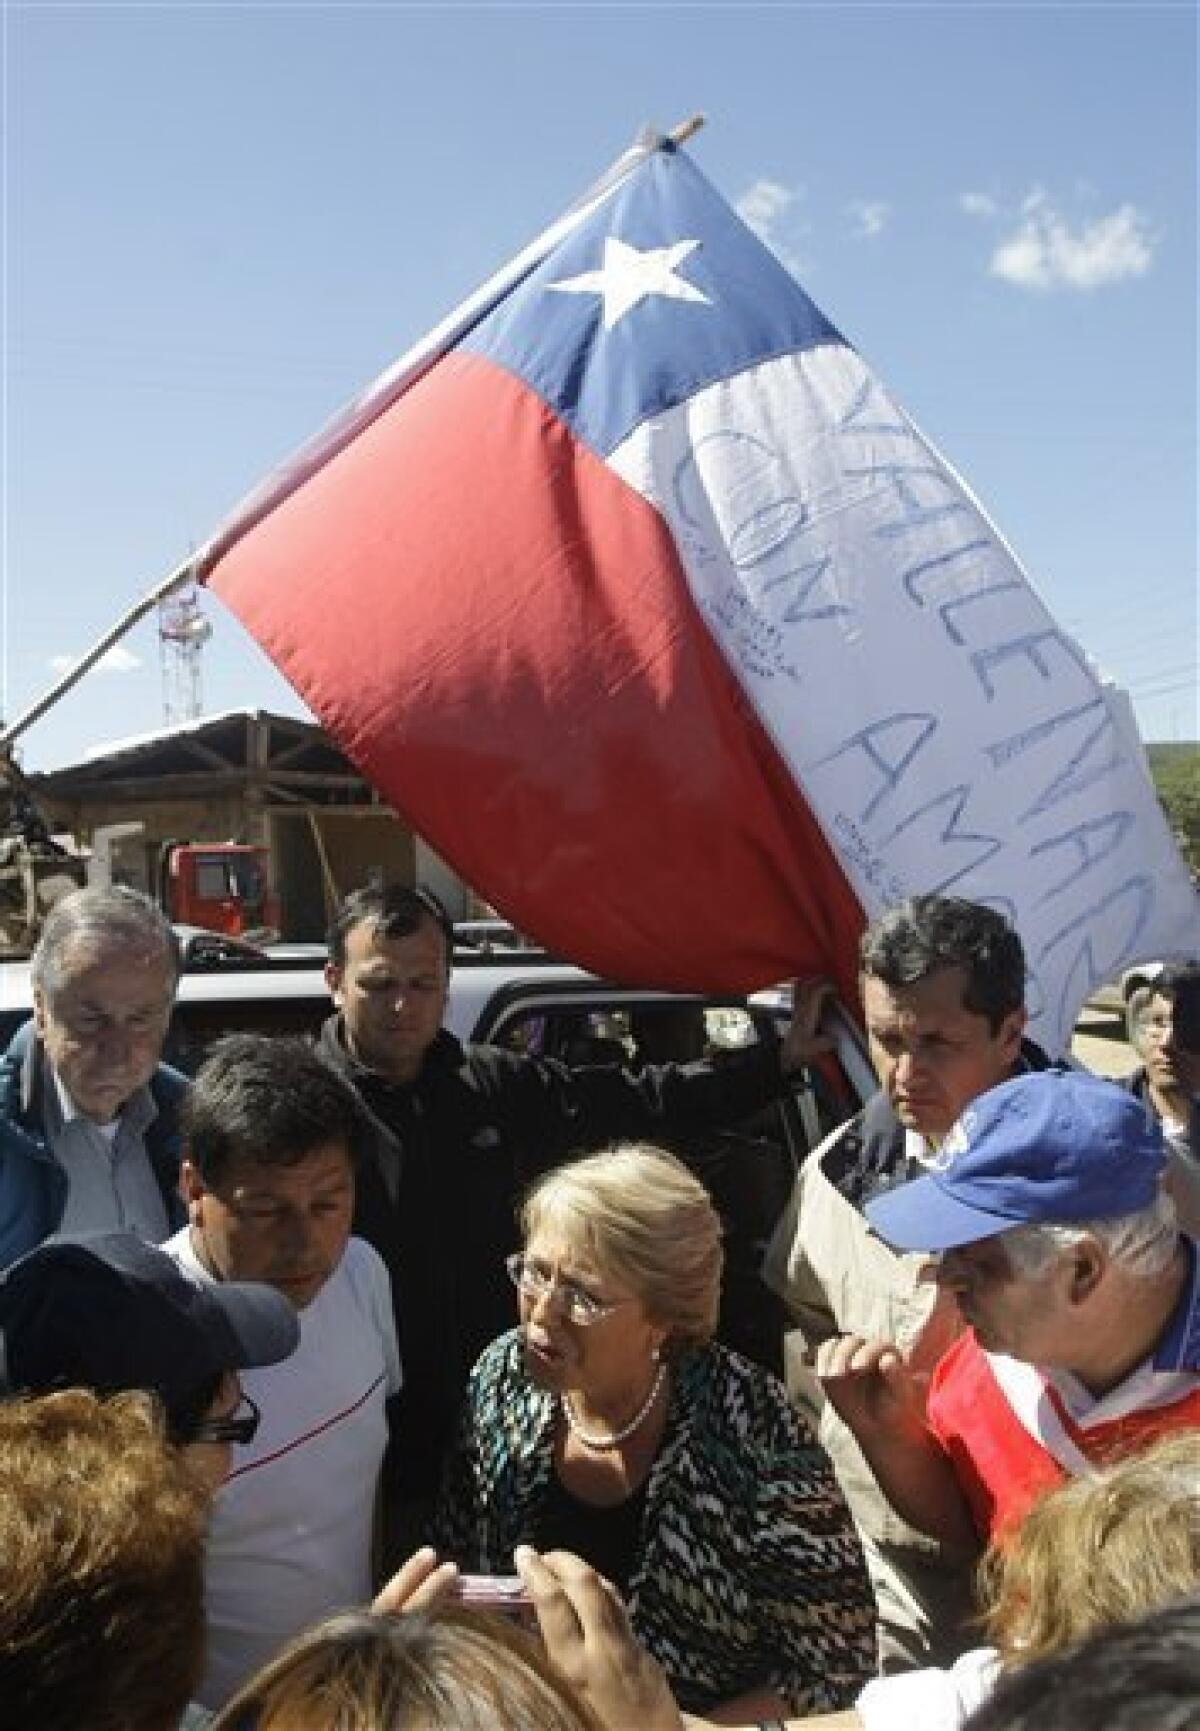 Chile's President Michelle Bachelet talks with earthquake survivors in Dichato, Chile, Monday, March 8, 2010. A devastating earthquake hit central Chile last Feb. 27, causing widespread damage. (AP Photo/Silvia Izquierdo)